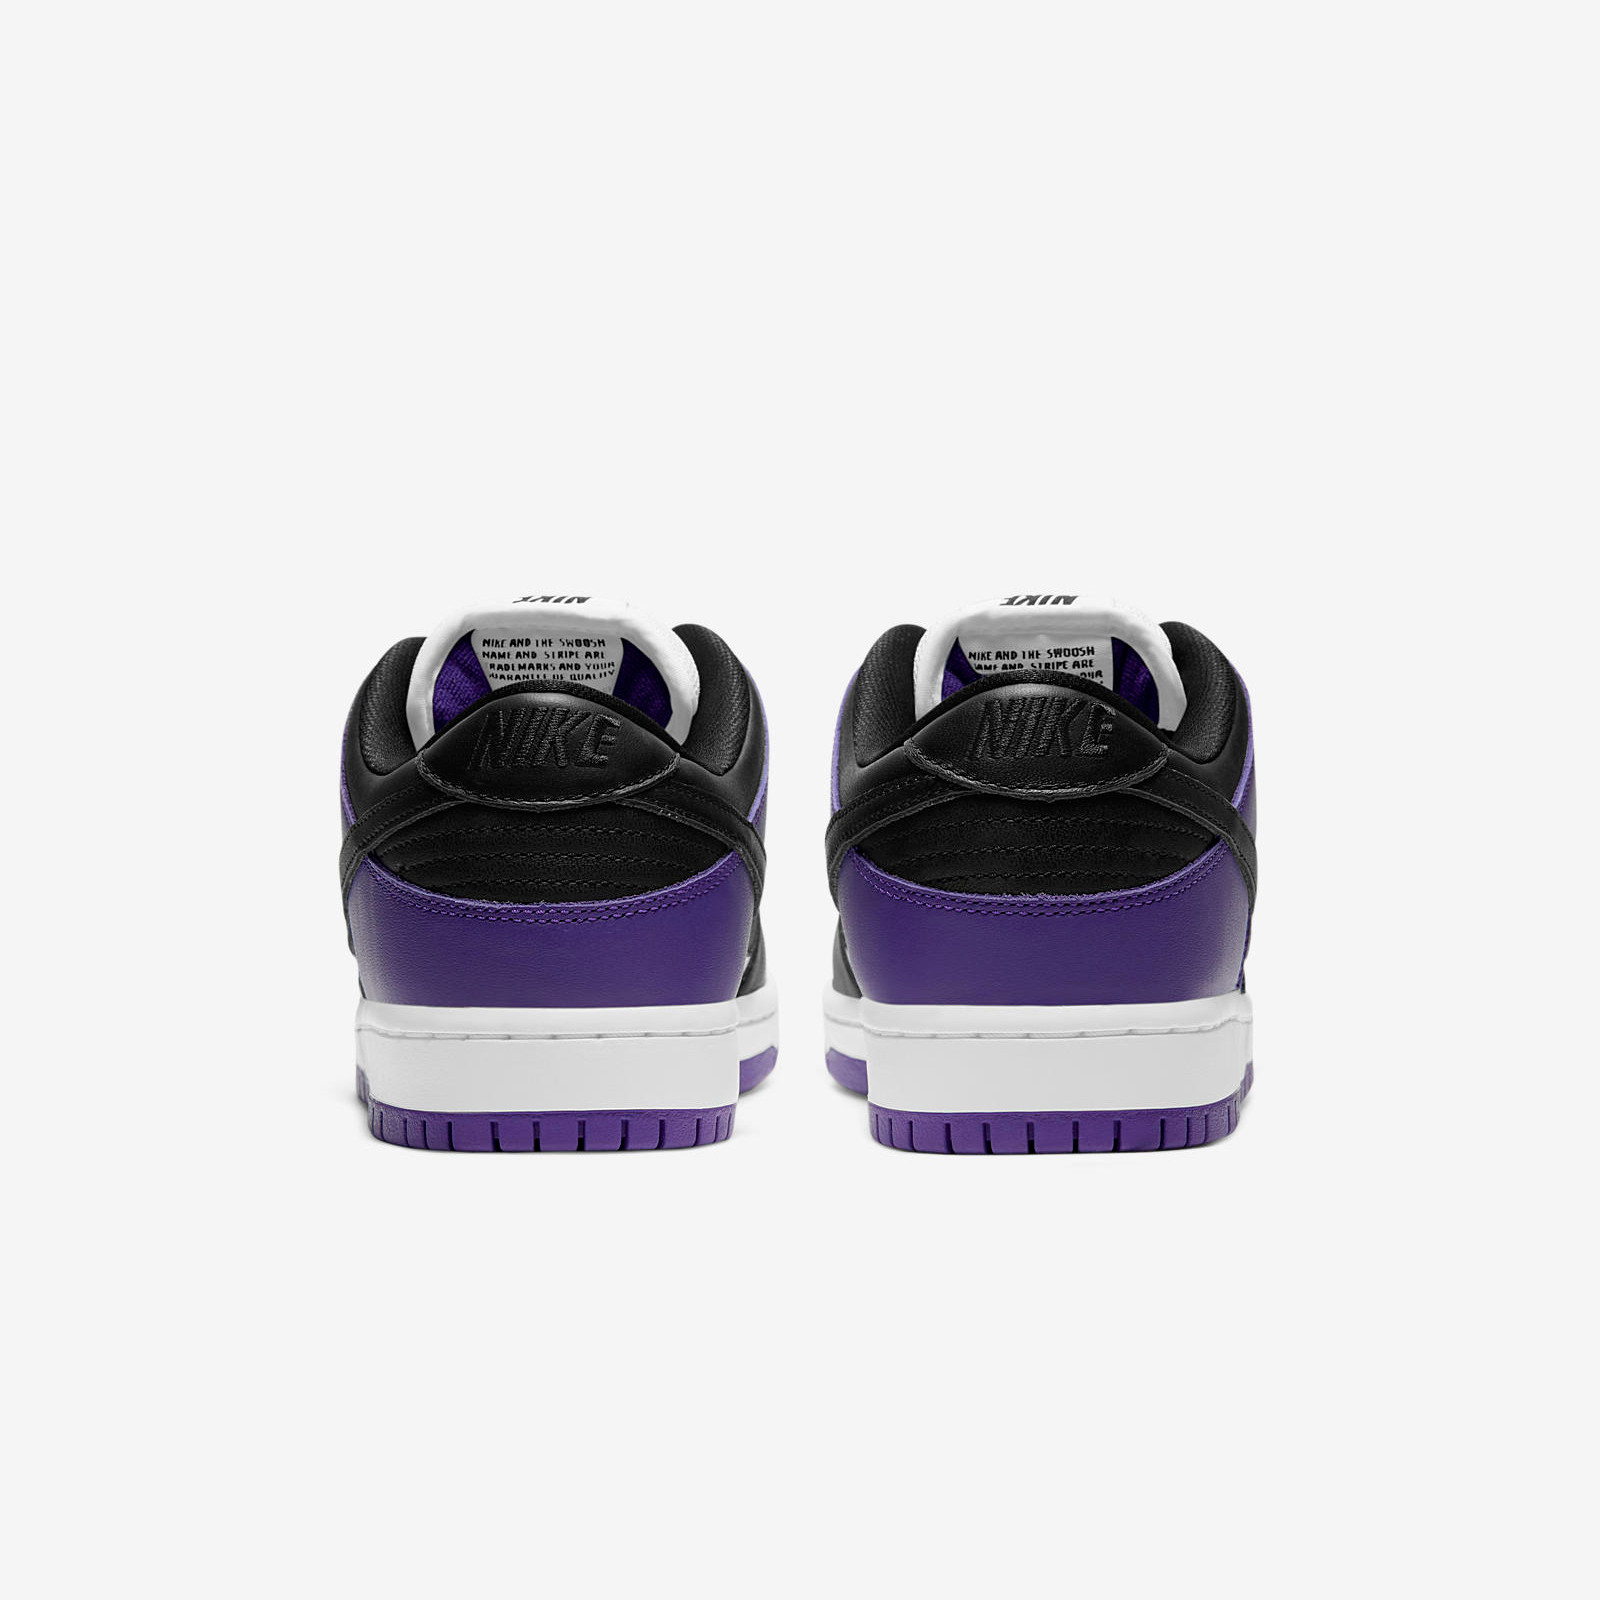 Nike SB Dunk Low
« Court Purple »